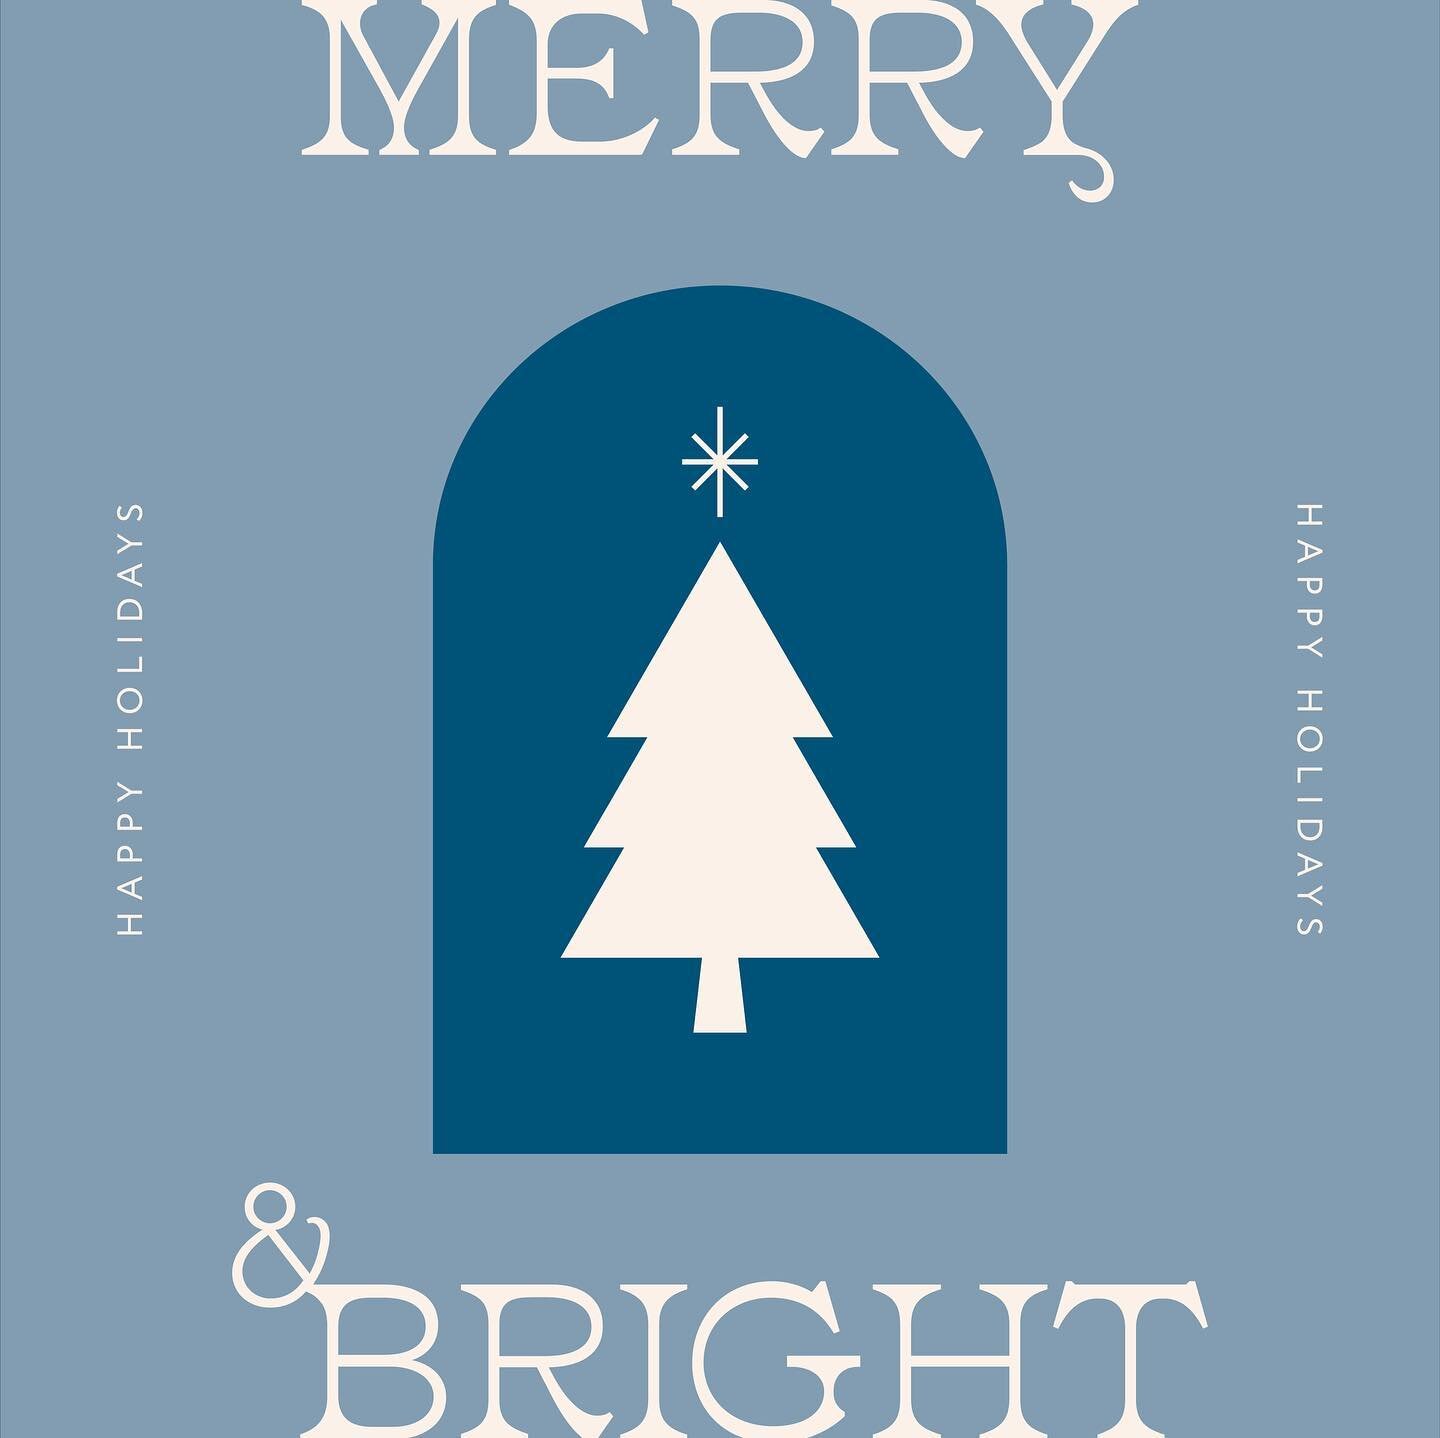 Merry Christmas &amp; Happy Holidays 🎄
.
.
.
#anneliesezakdesign #graphicdesign #graphicdesigner #illustrator #merrychristmas #happyholidays #holidayseason #typography #illustration #designfeed #designinspiration #graphicdesigninspiration #graphicde